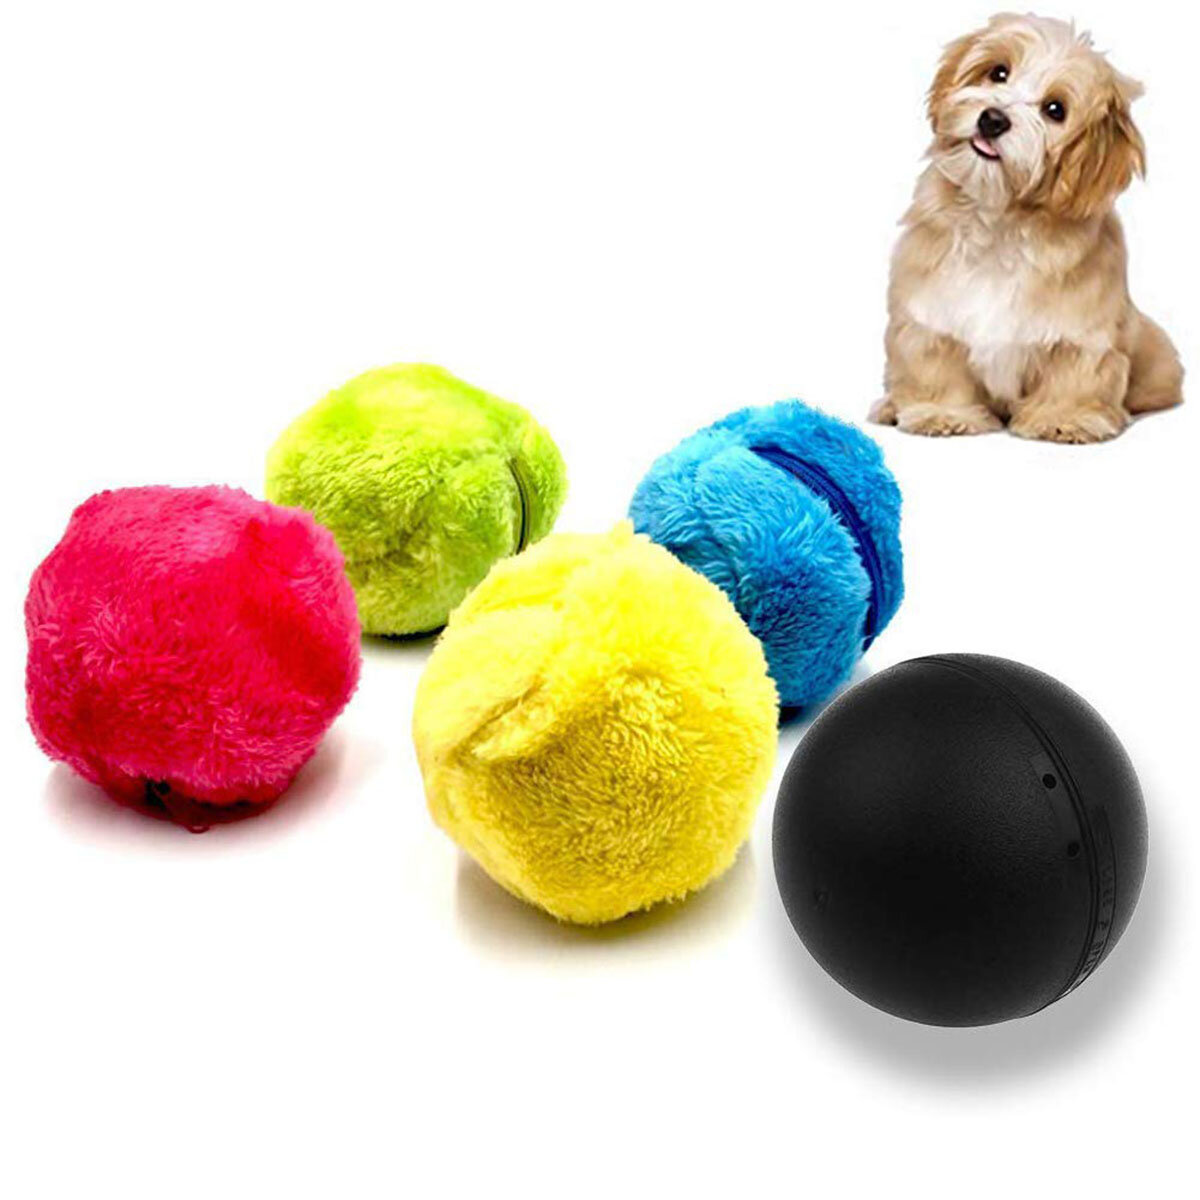 animal ball toy